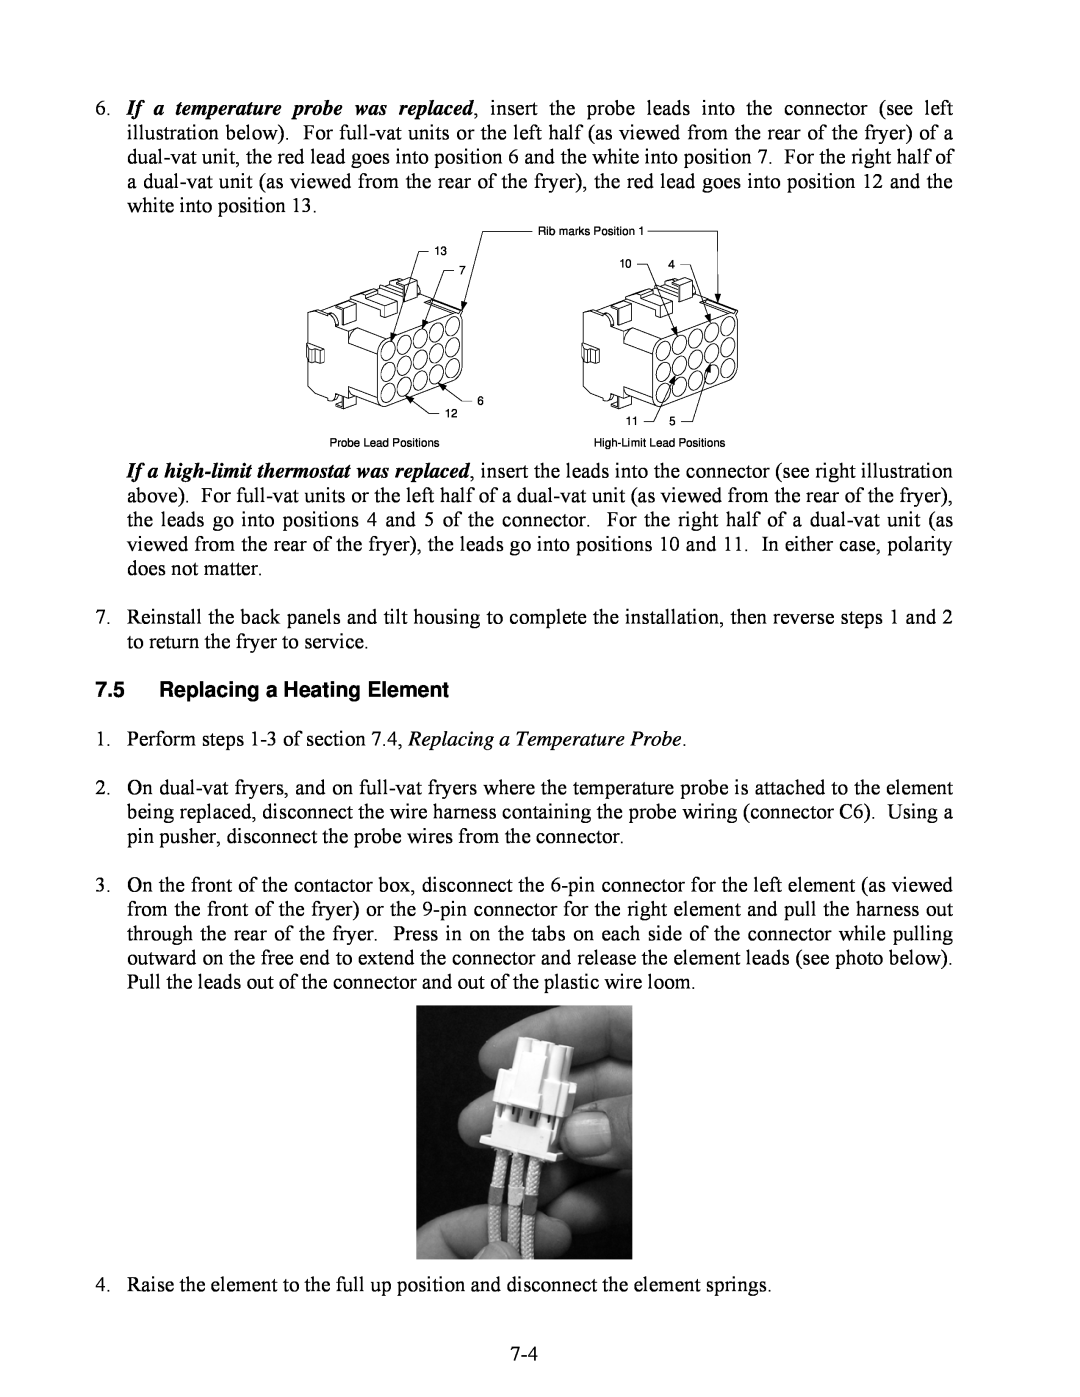 Frymaster H22SC, H17SC, H14SC manual Replacing a Heating Element 